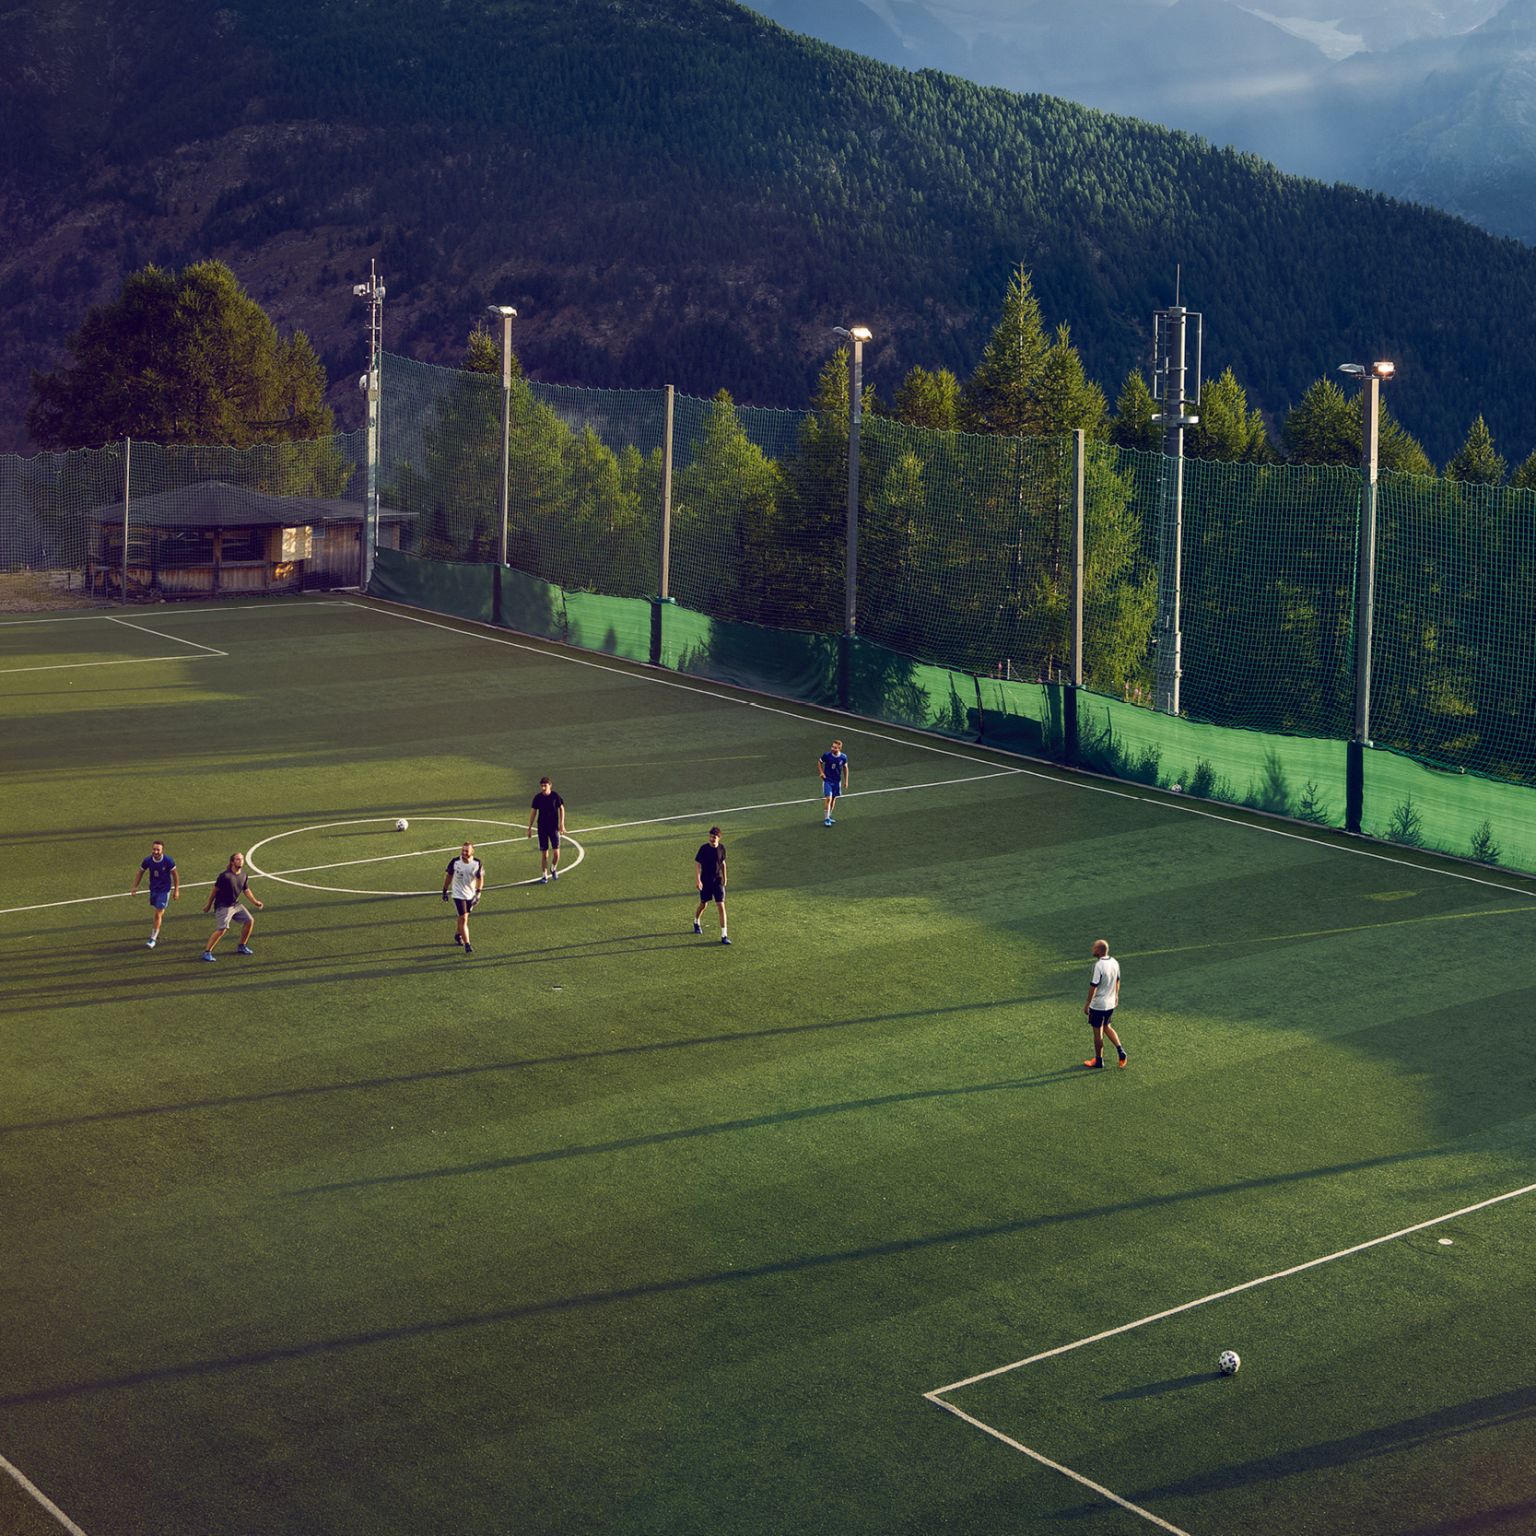 Match de football en Valais, work-life balance, hobby, vivre et travailler en Valais, Suisse